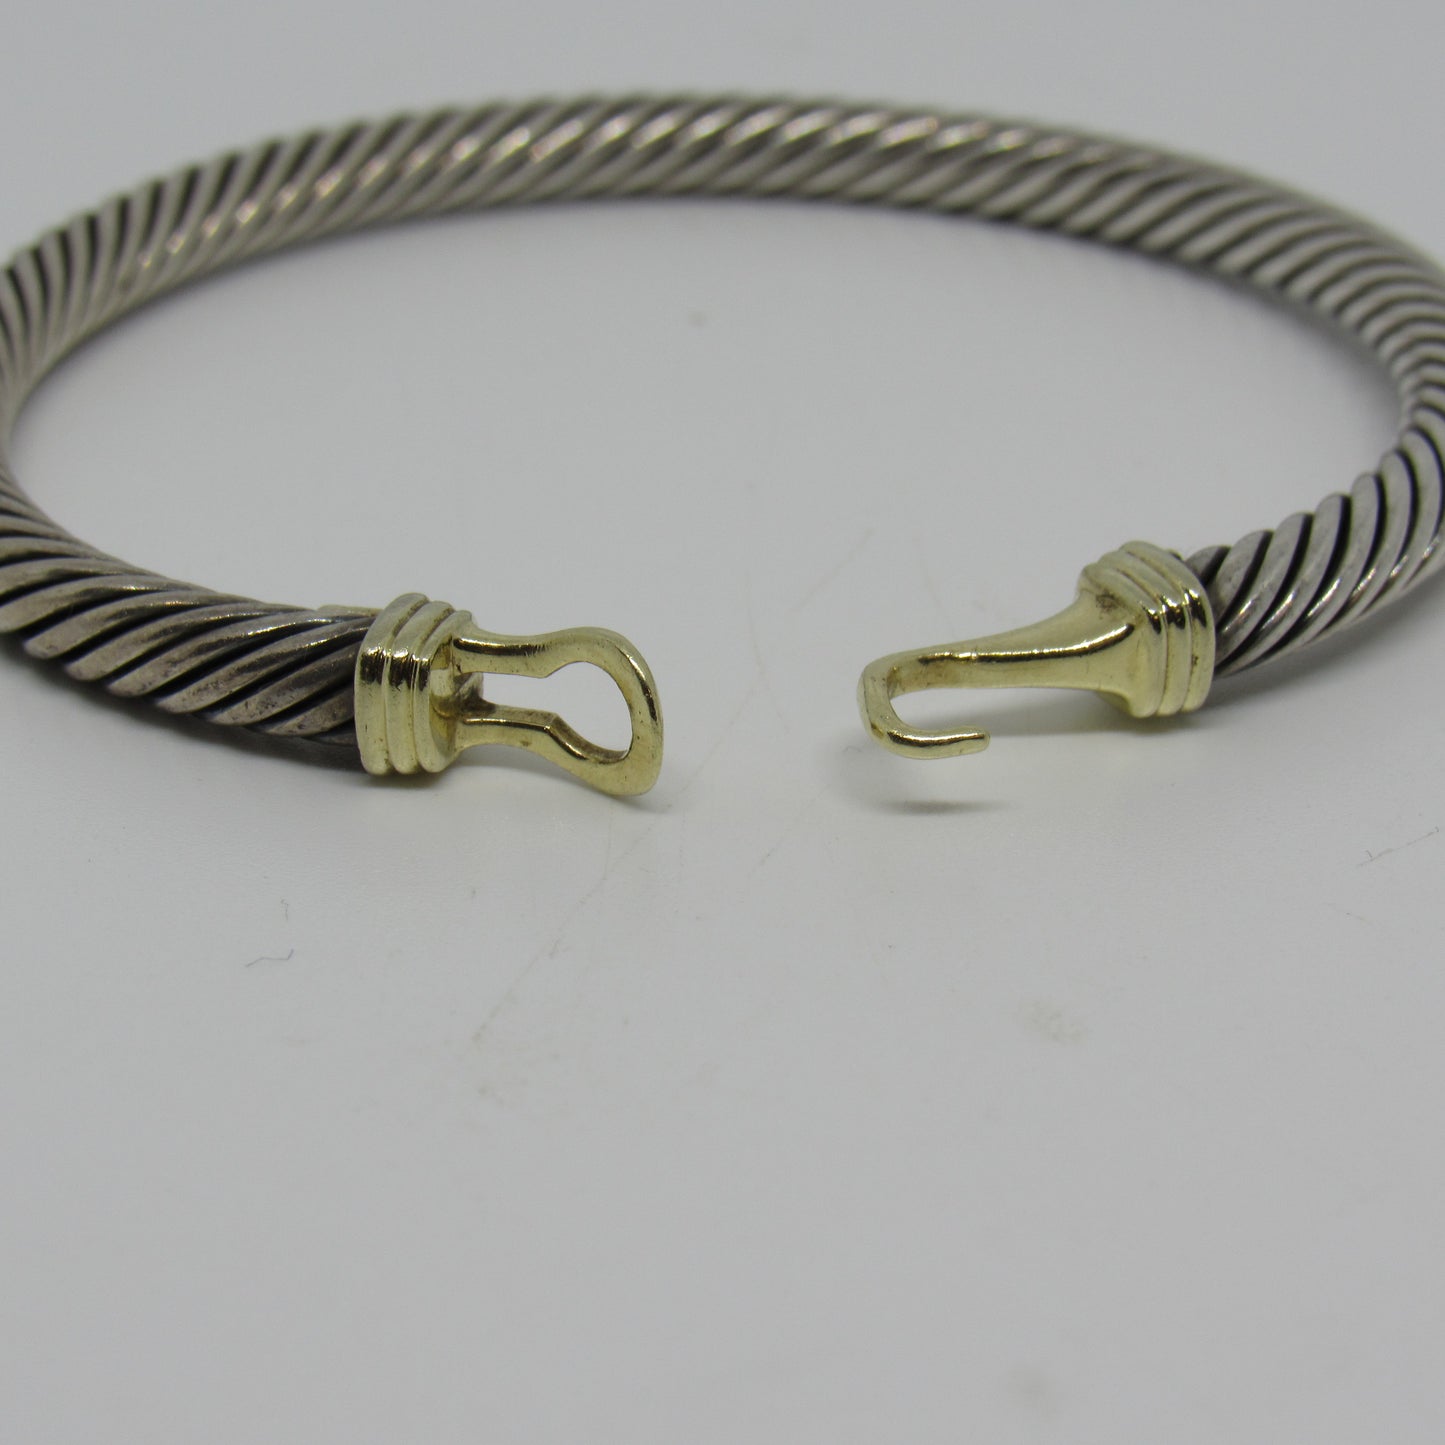 David Yurman Sterling Silver 14k Yellow Gold 5mm Cable Buckle Bracelet - 6.5 inch